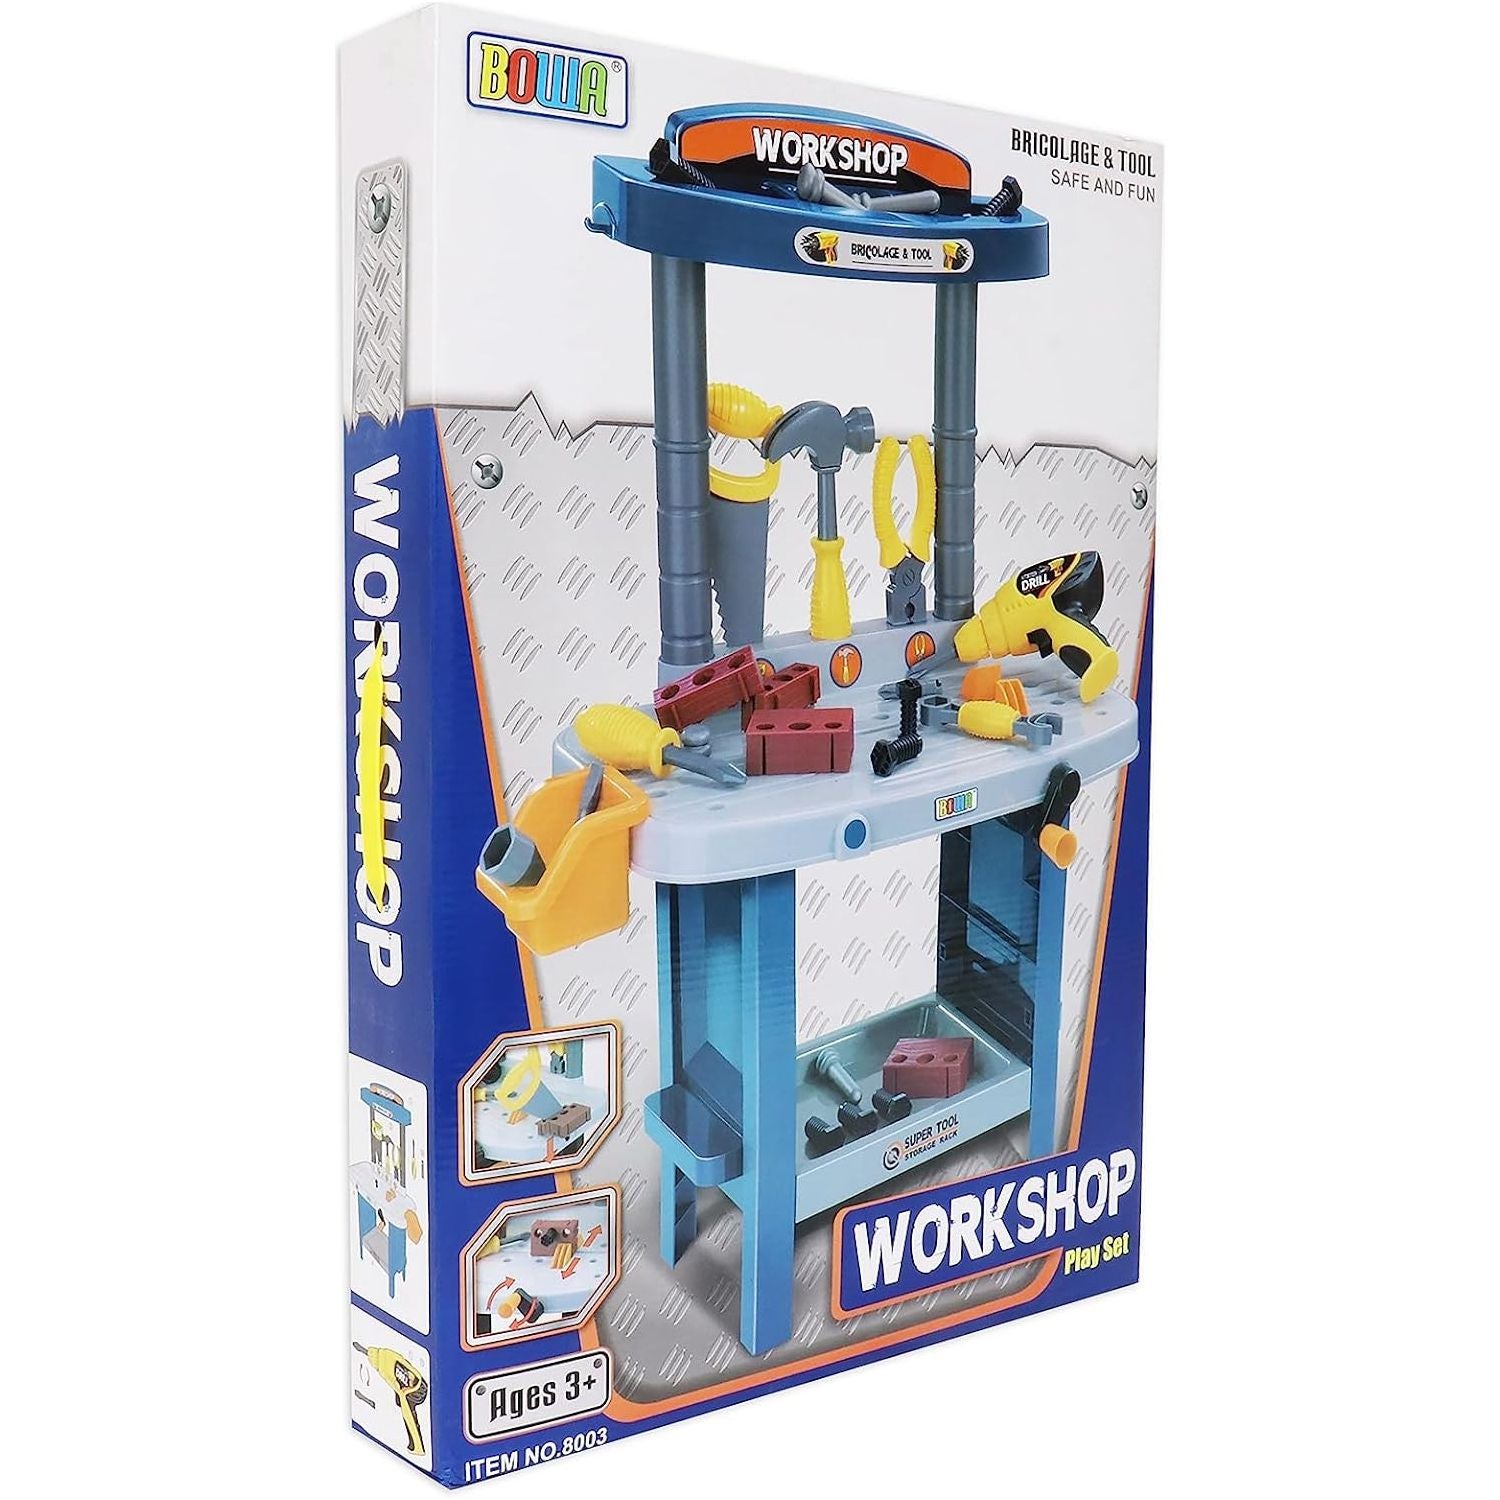 Bowa Super Workshop Bricolage & Tool Play Set 37Pcs - 8003